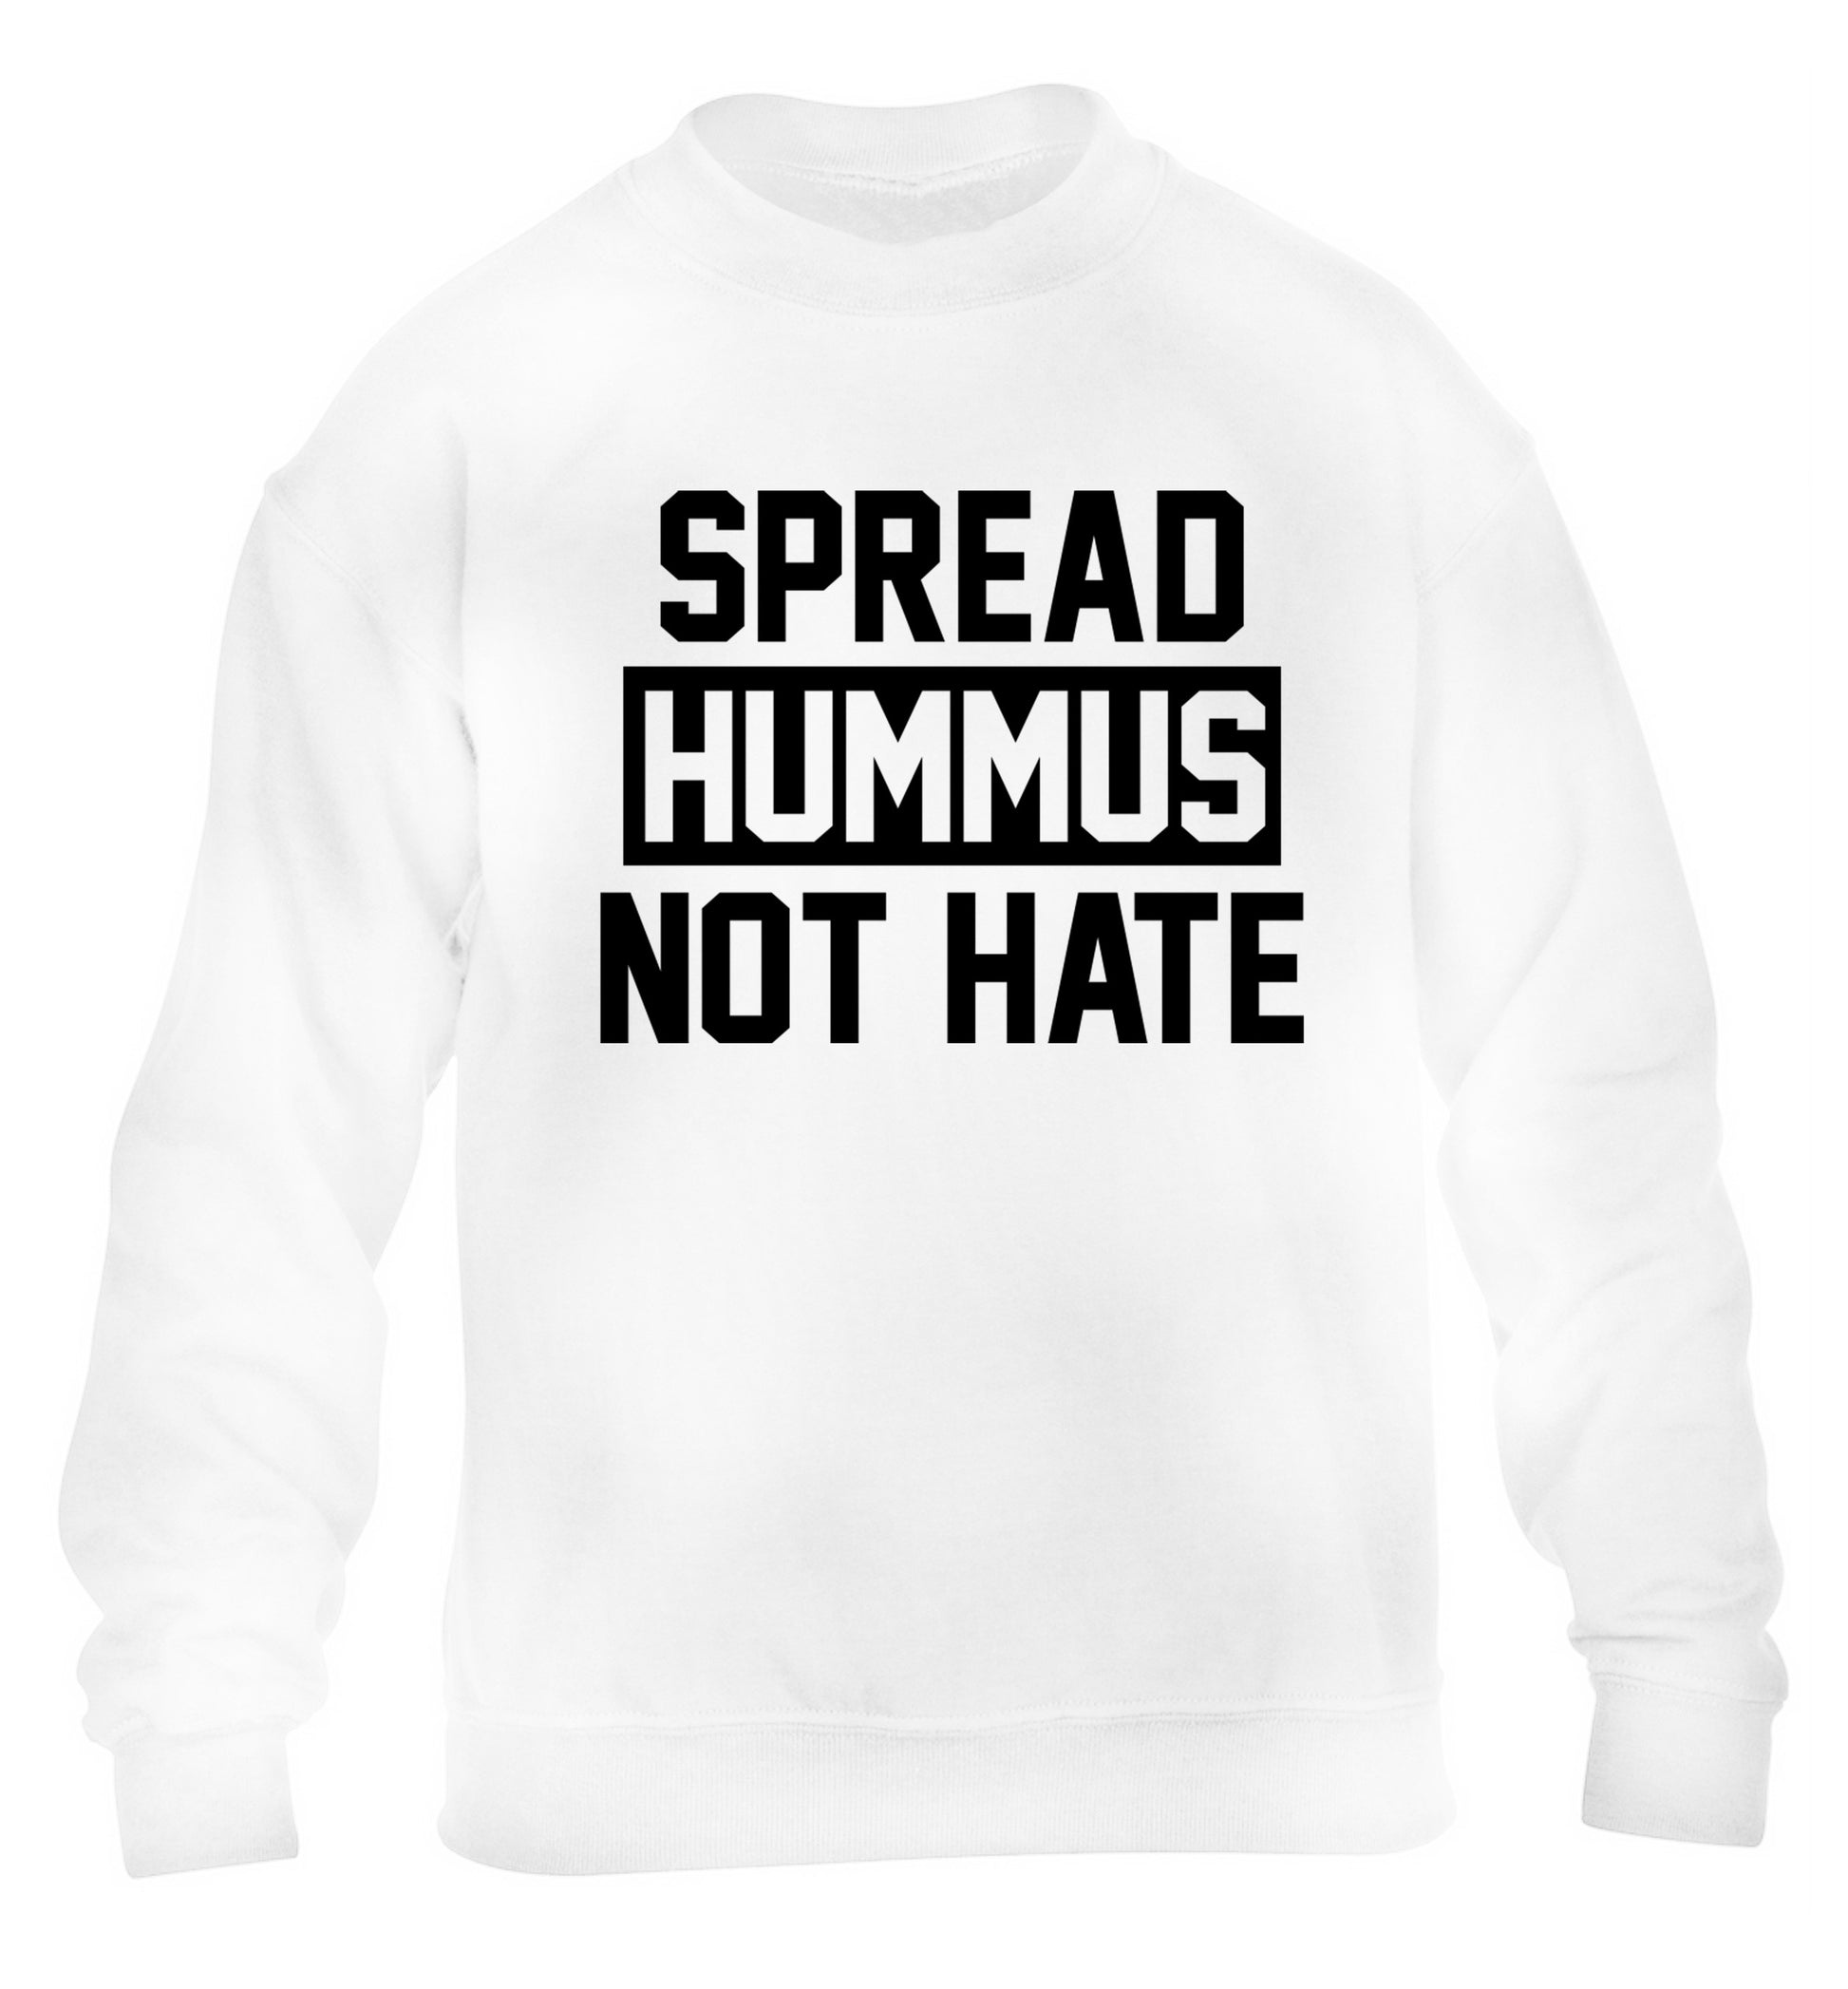 Spread hummus not hate children's white sweater 12-14 Years